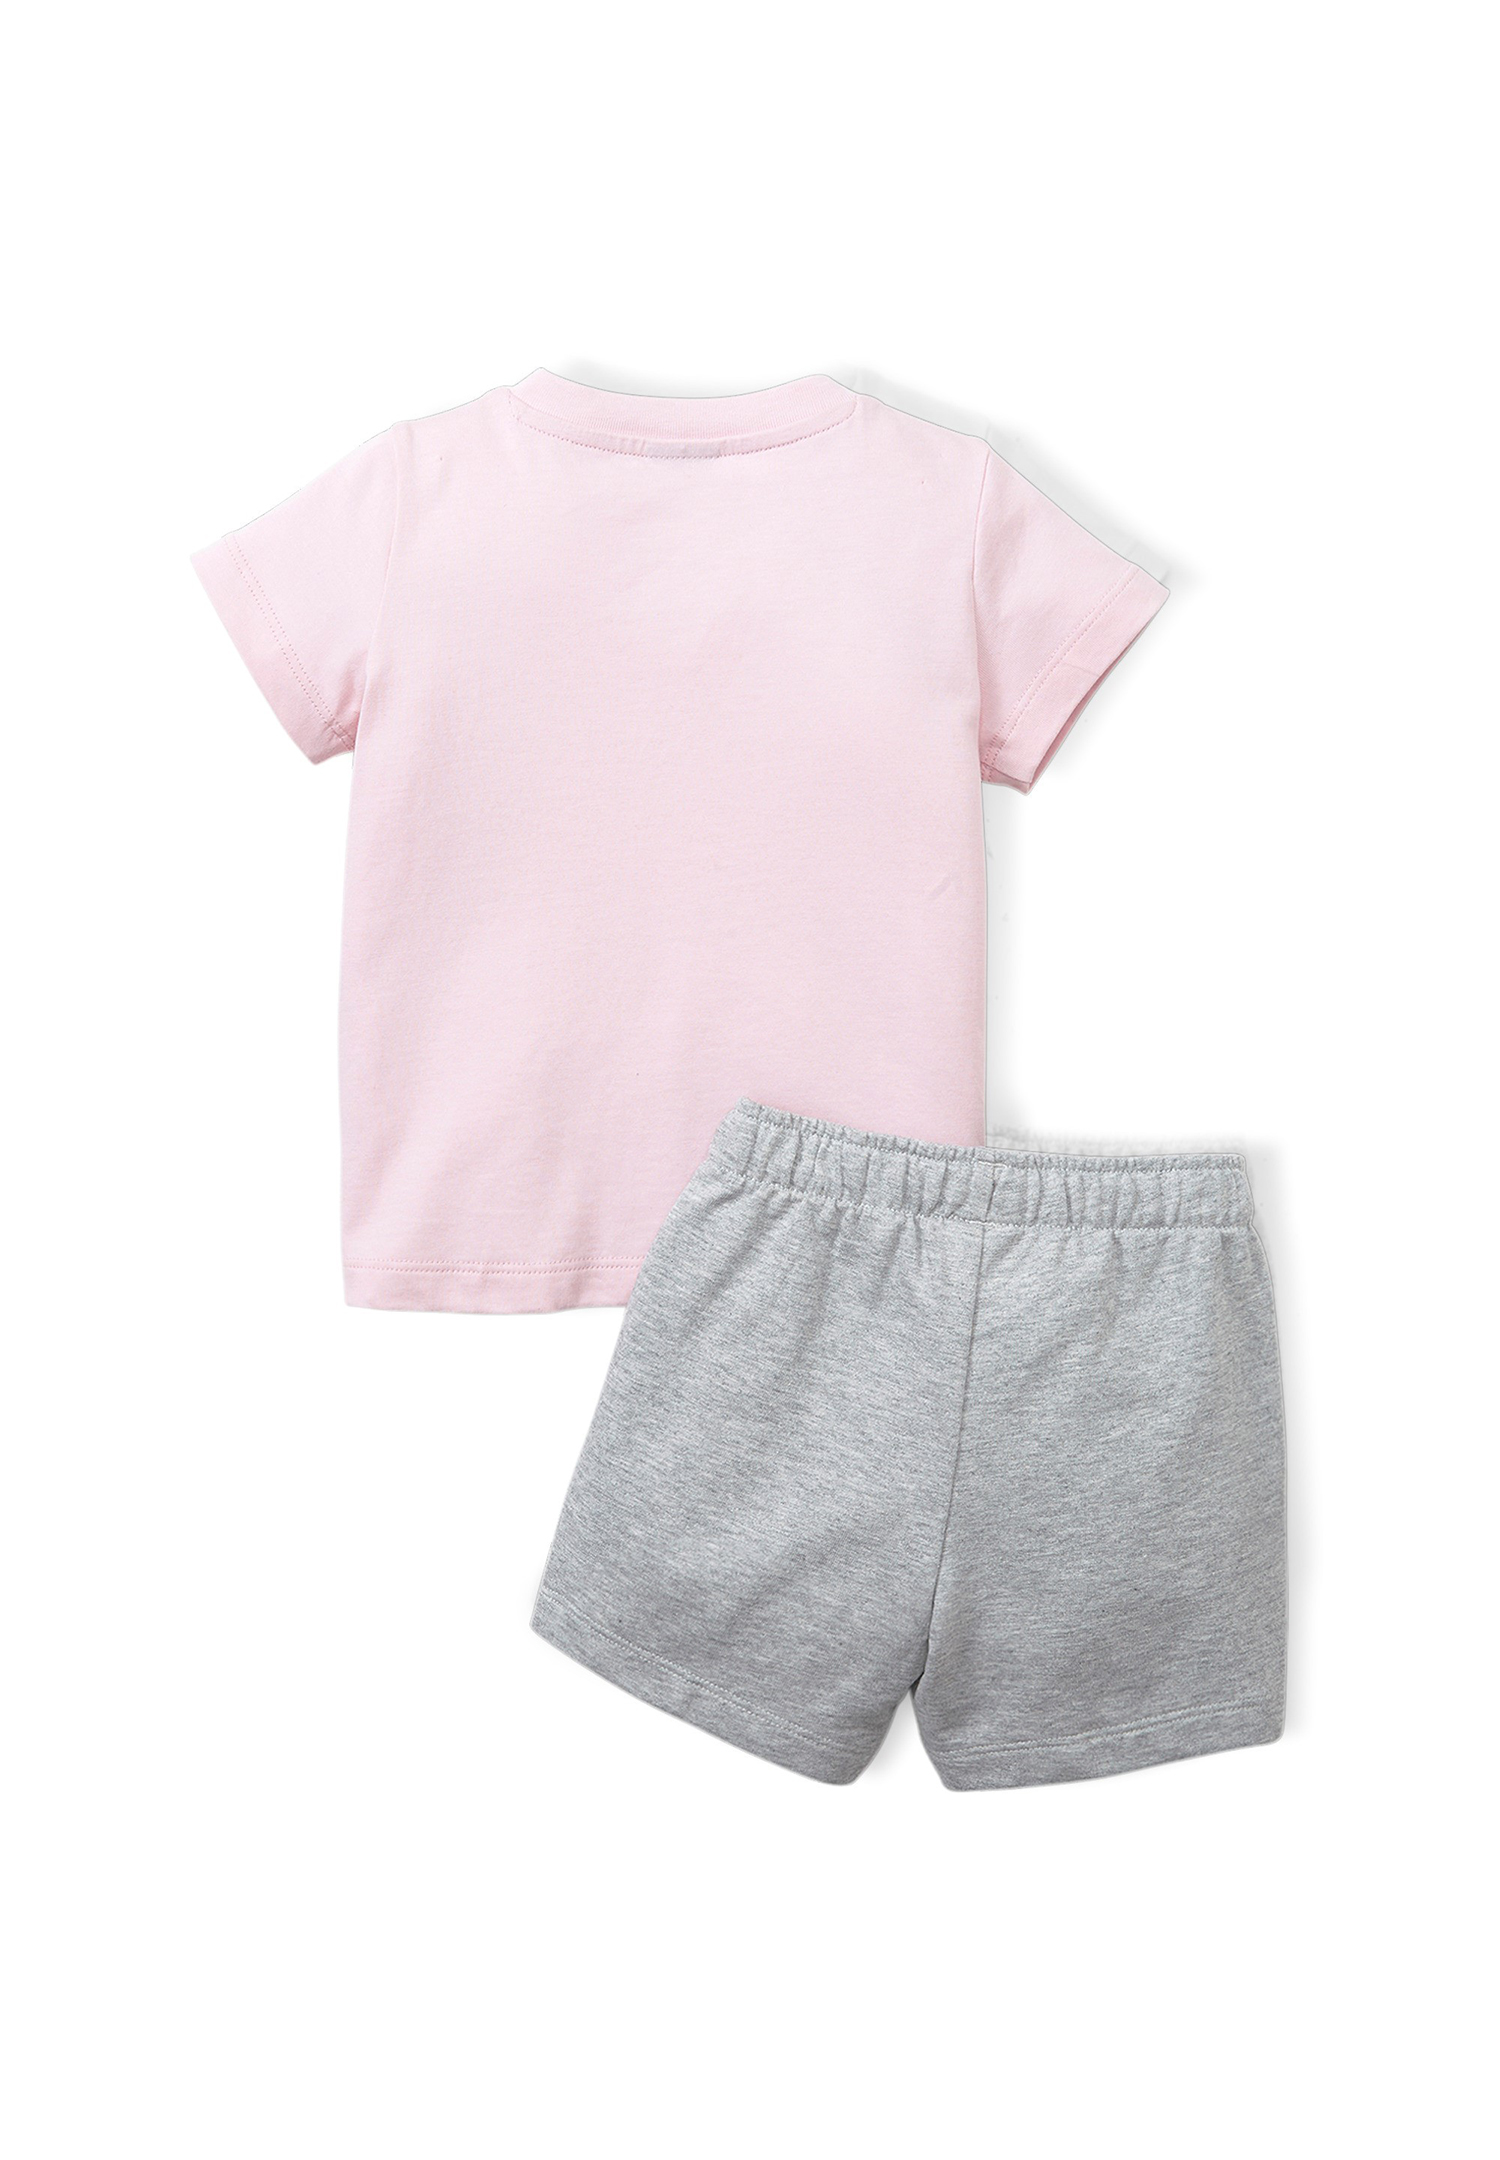 Puma Minicats Tee & Shorts Set rosa/grau 845839 16